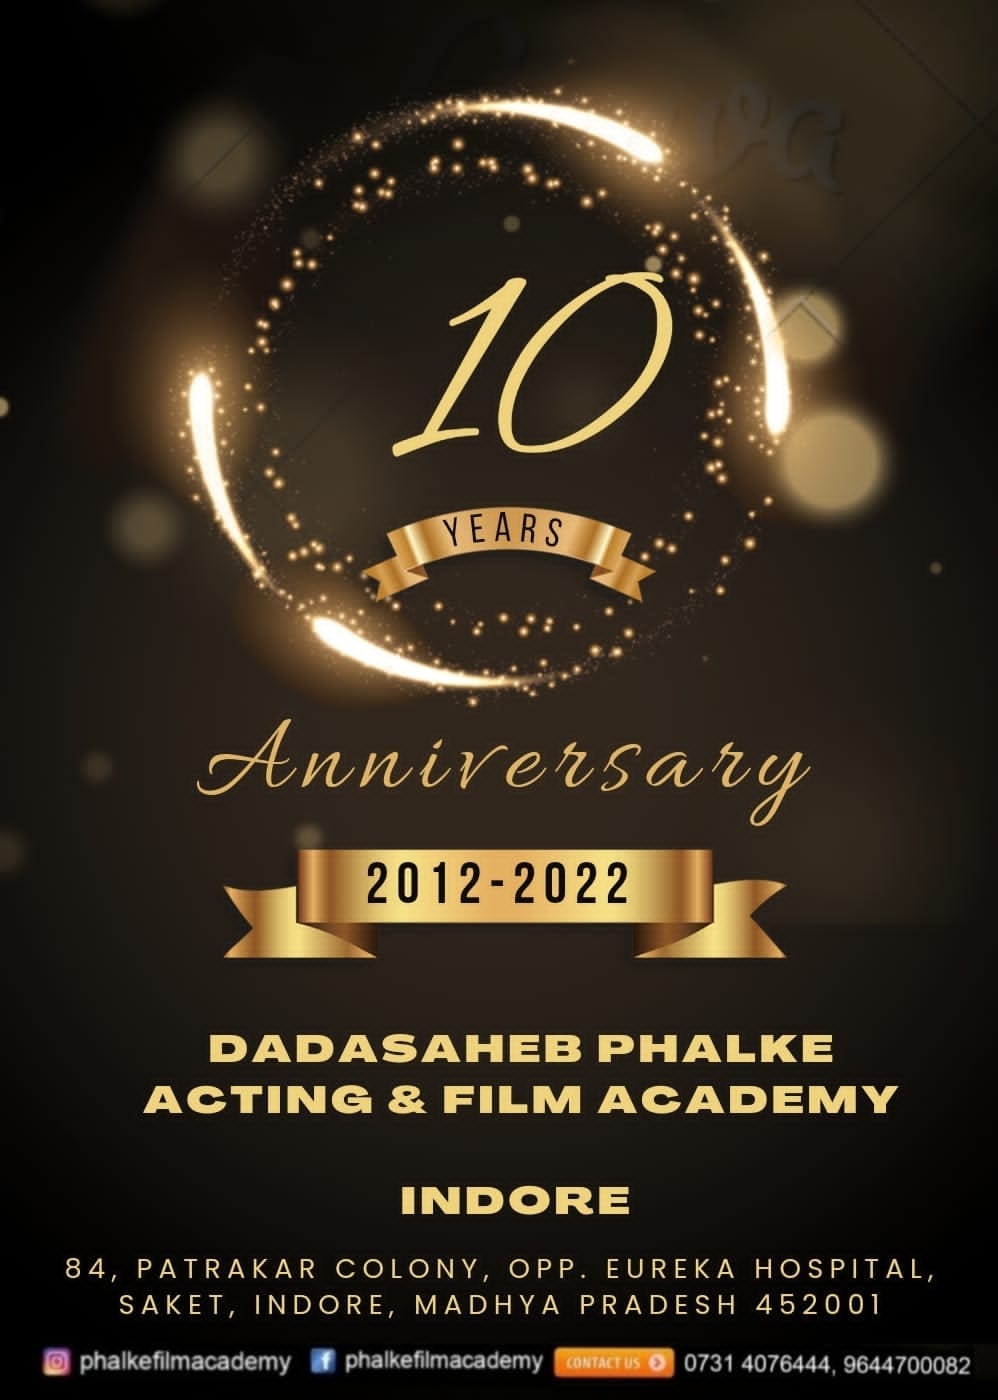 Dazzlerr - Dadasaheb Phalke Acting and Film Academy Gallery img 07